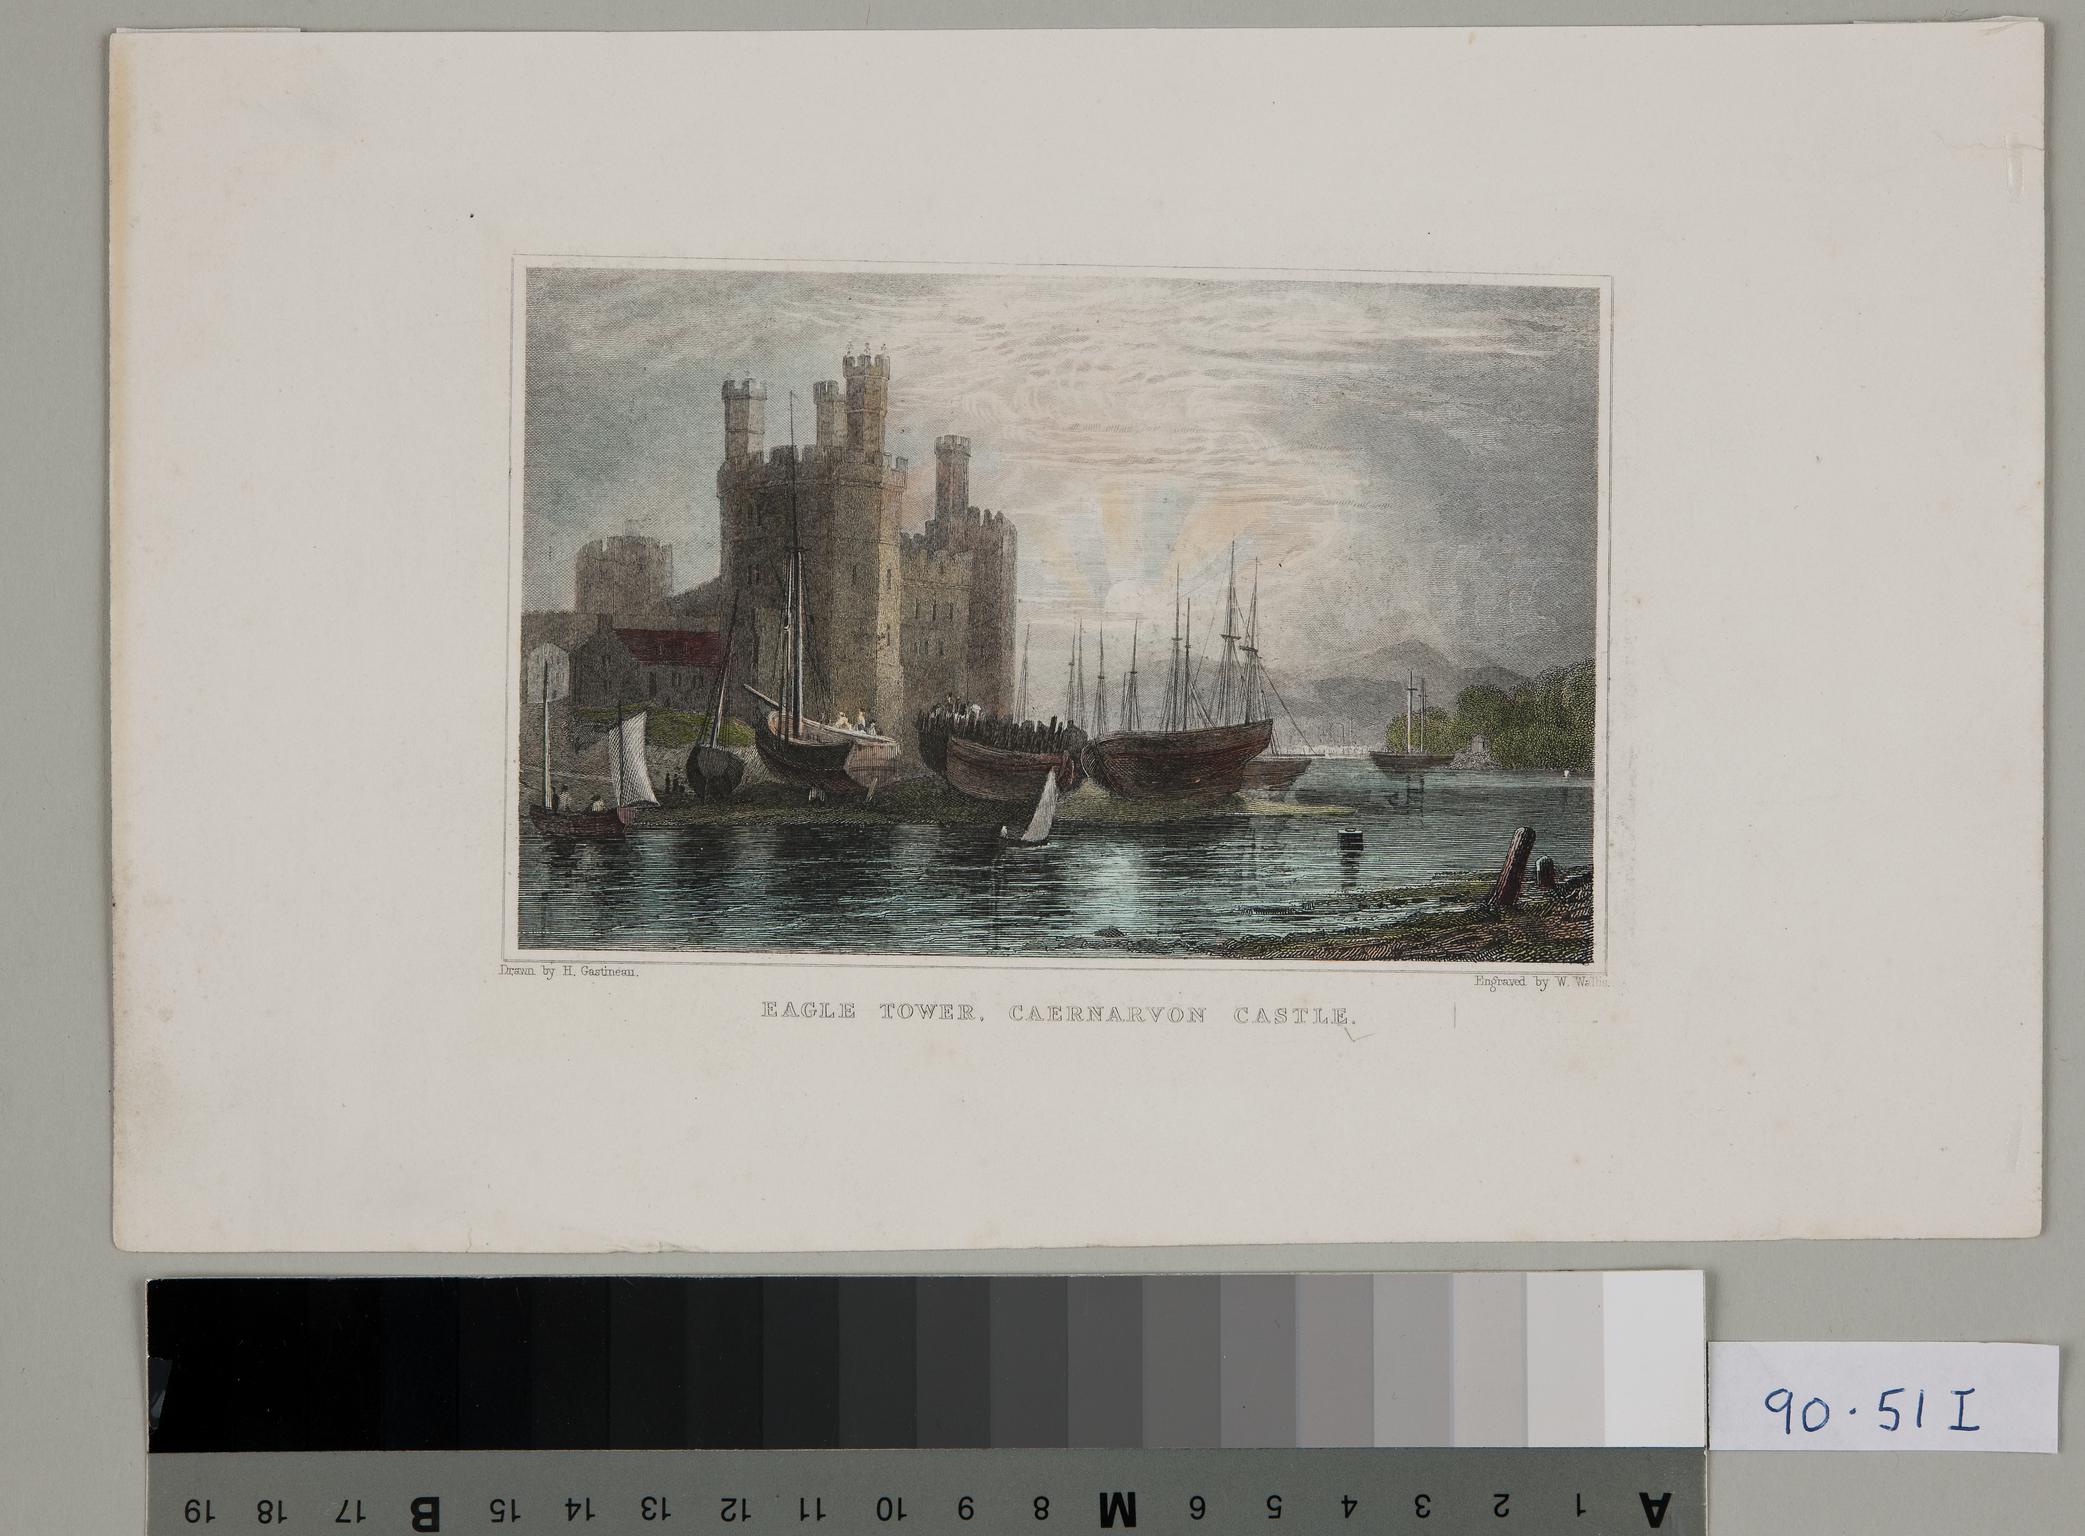 Eagle Tower, Caernarvon Castle (print)